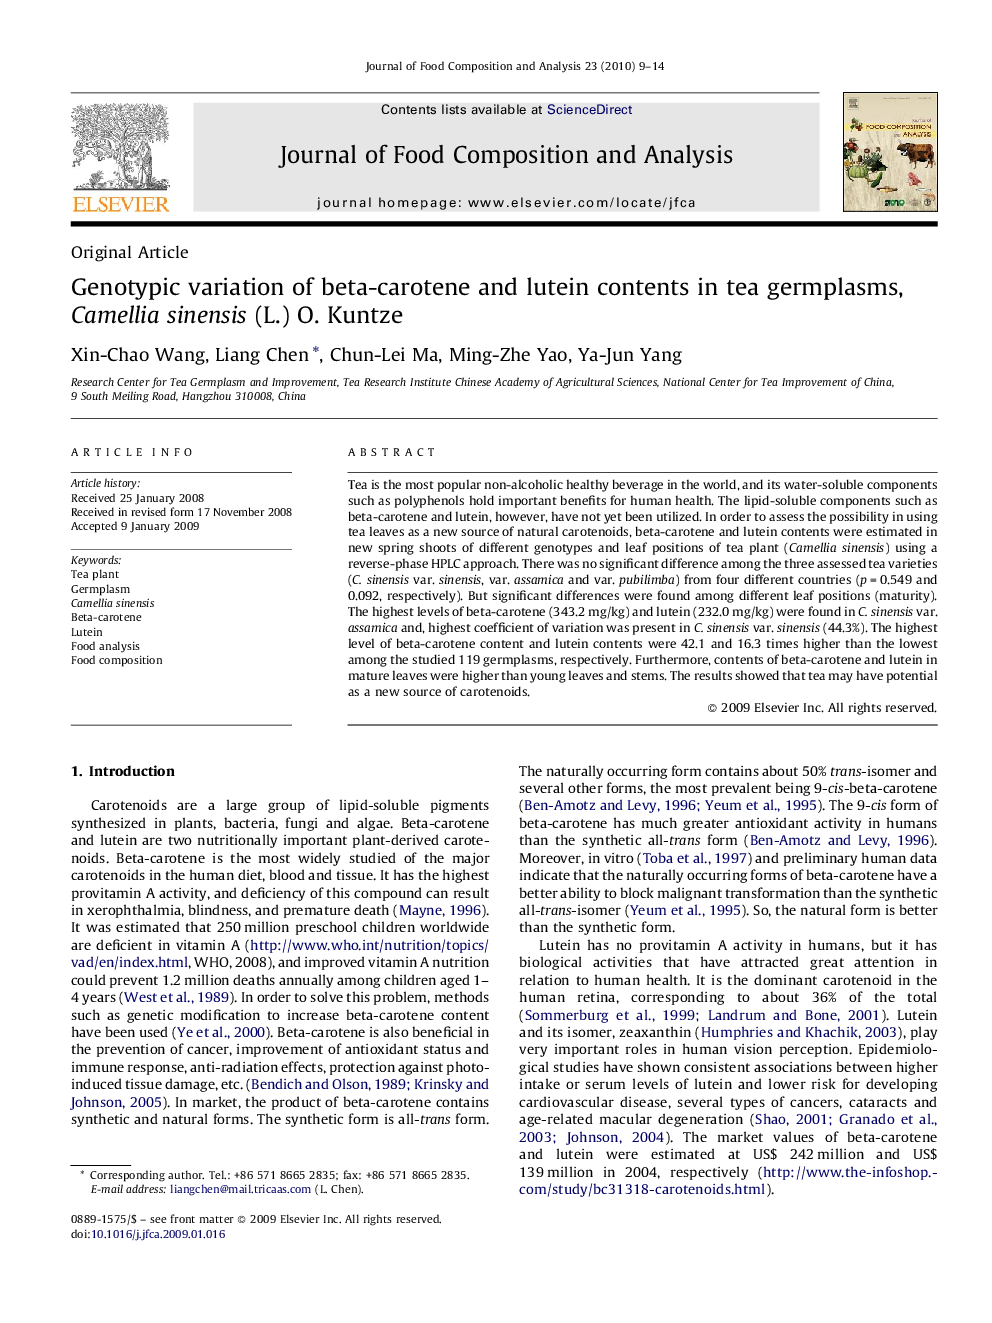 Genotypic variation of beta-carotene and lutein contents in tea germplasms, Camellia sinensis (L.) O. Kuntze